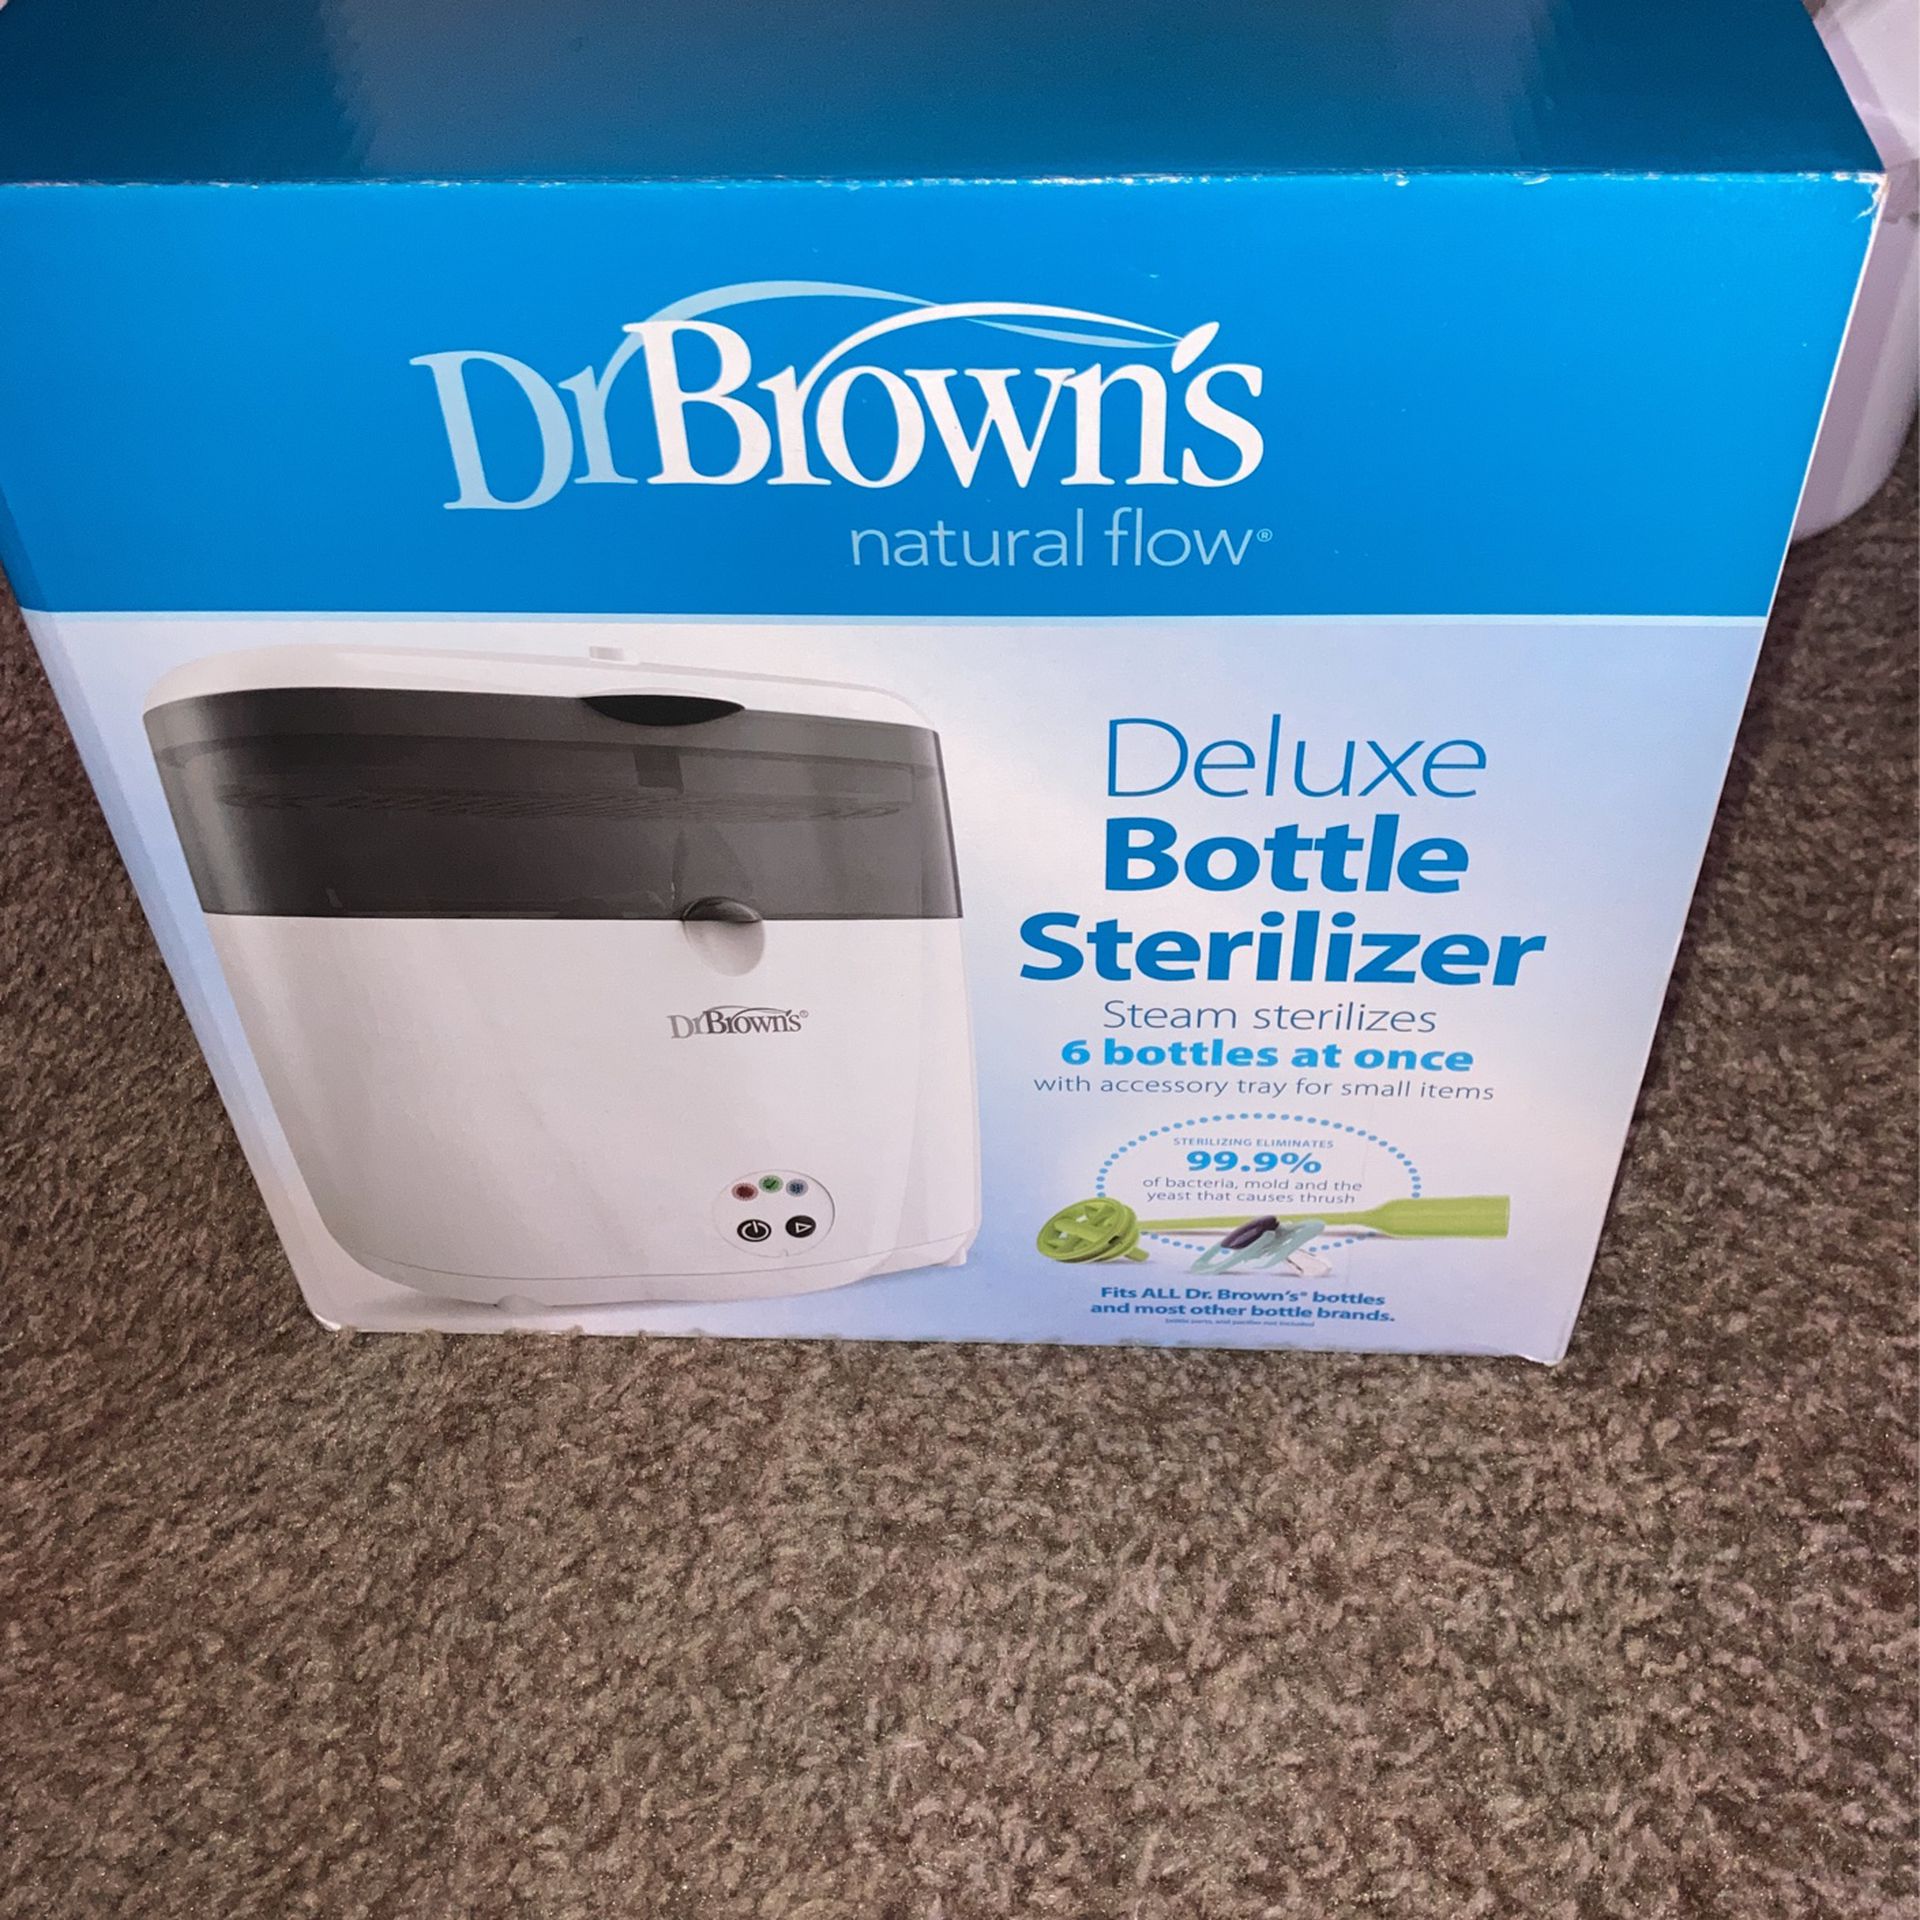 Dr. Browns Deluxe Bottle Sterilizer